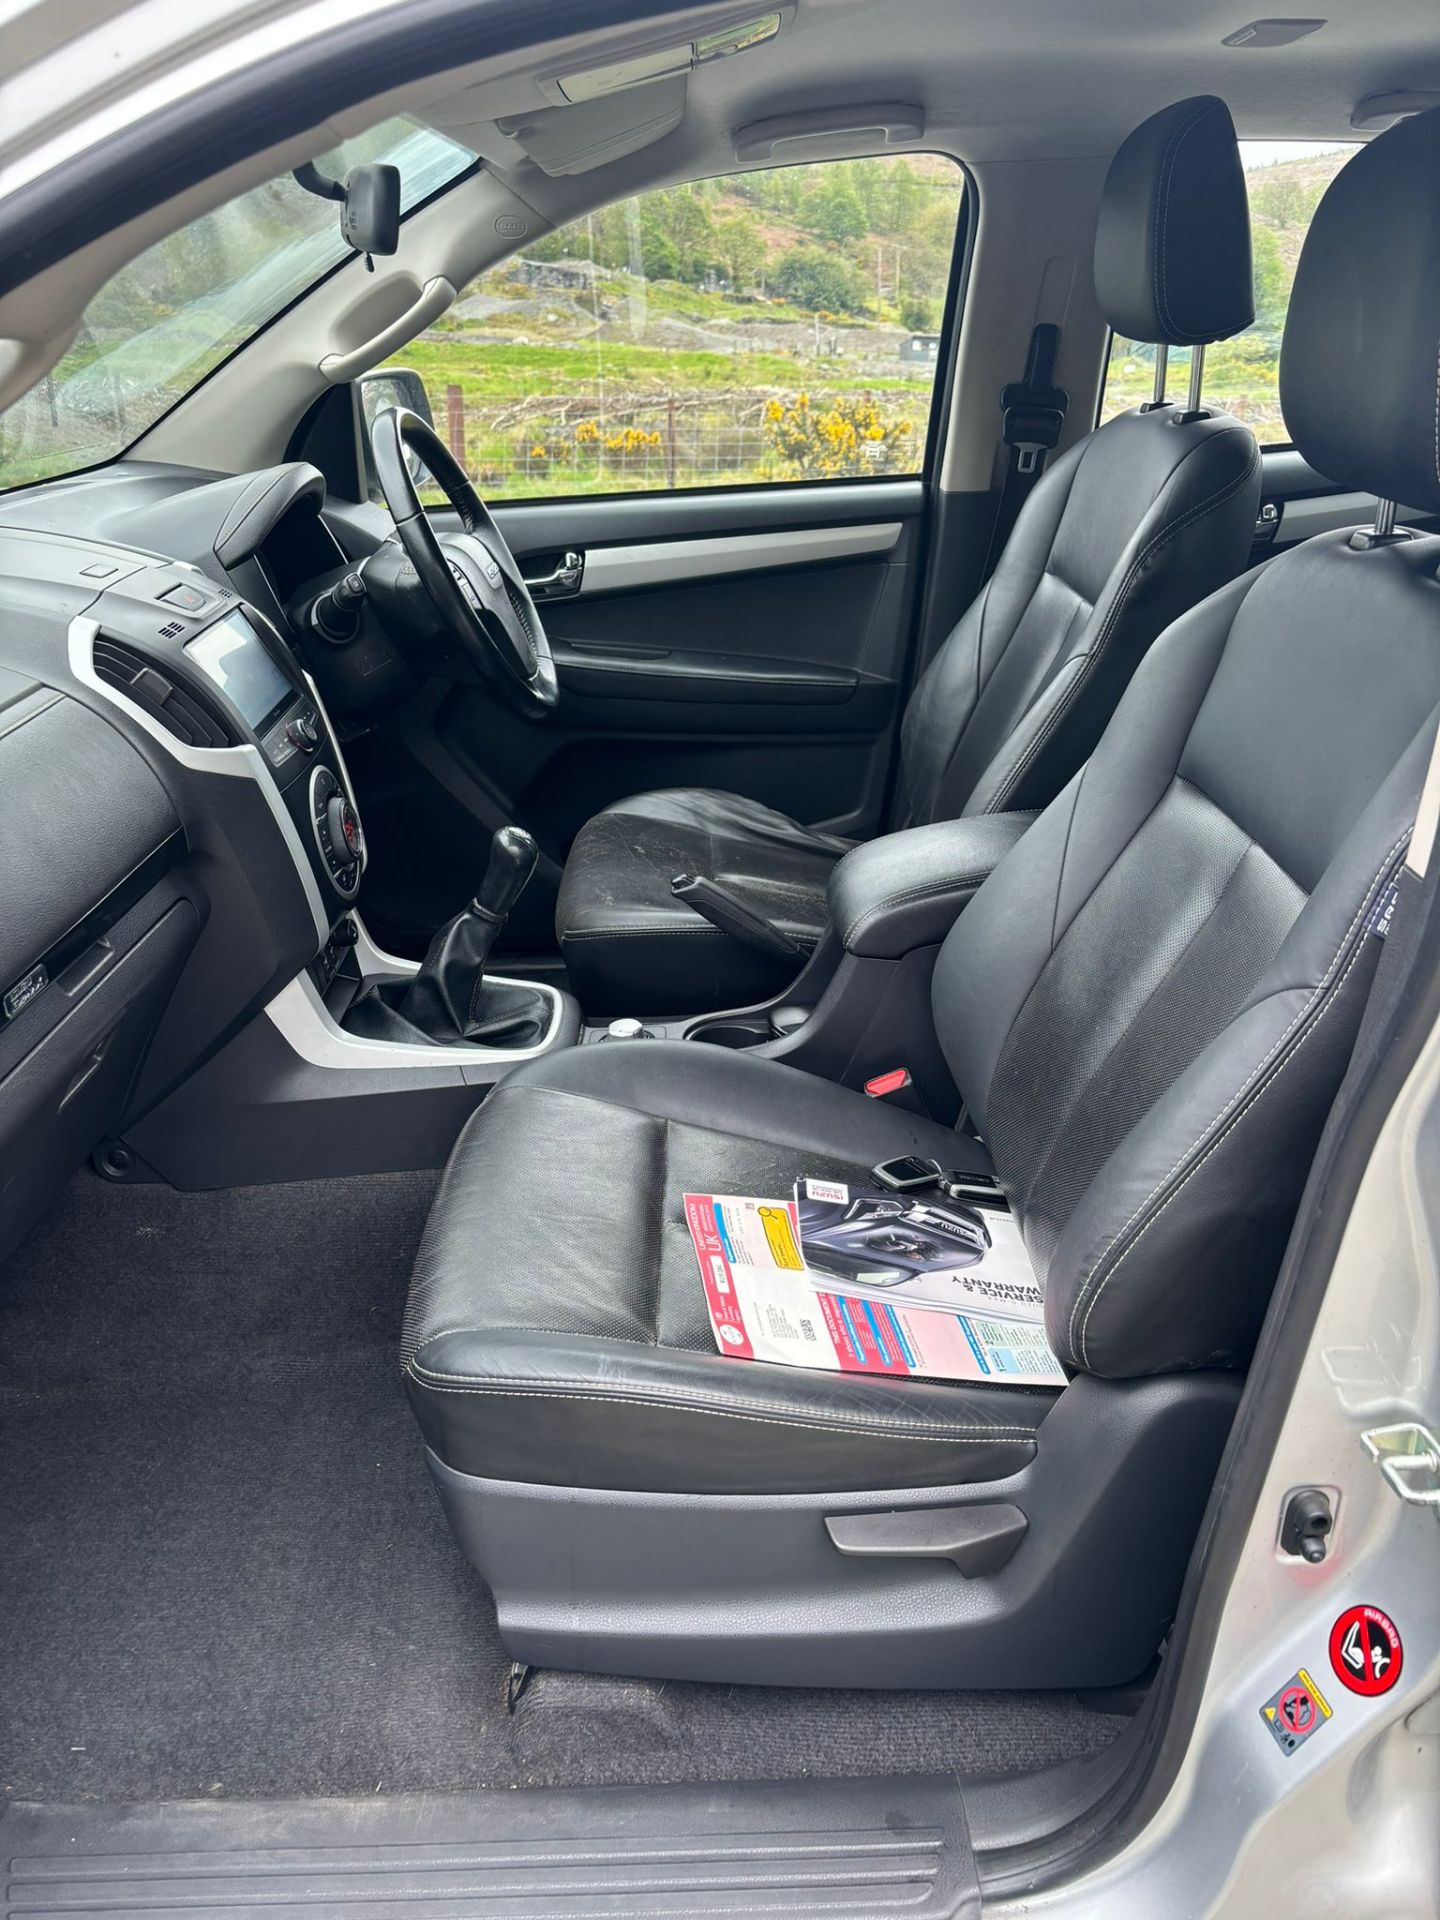 2019 ISUZU D-MAX DOUBLE CAB PICKUP TRUCK - Image 11 of 15